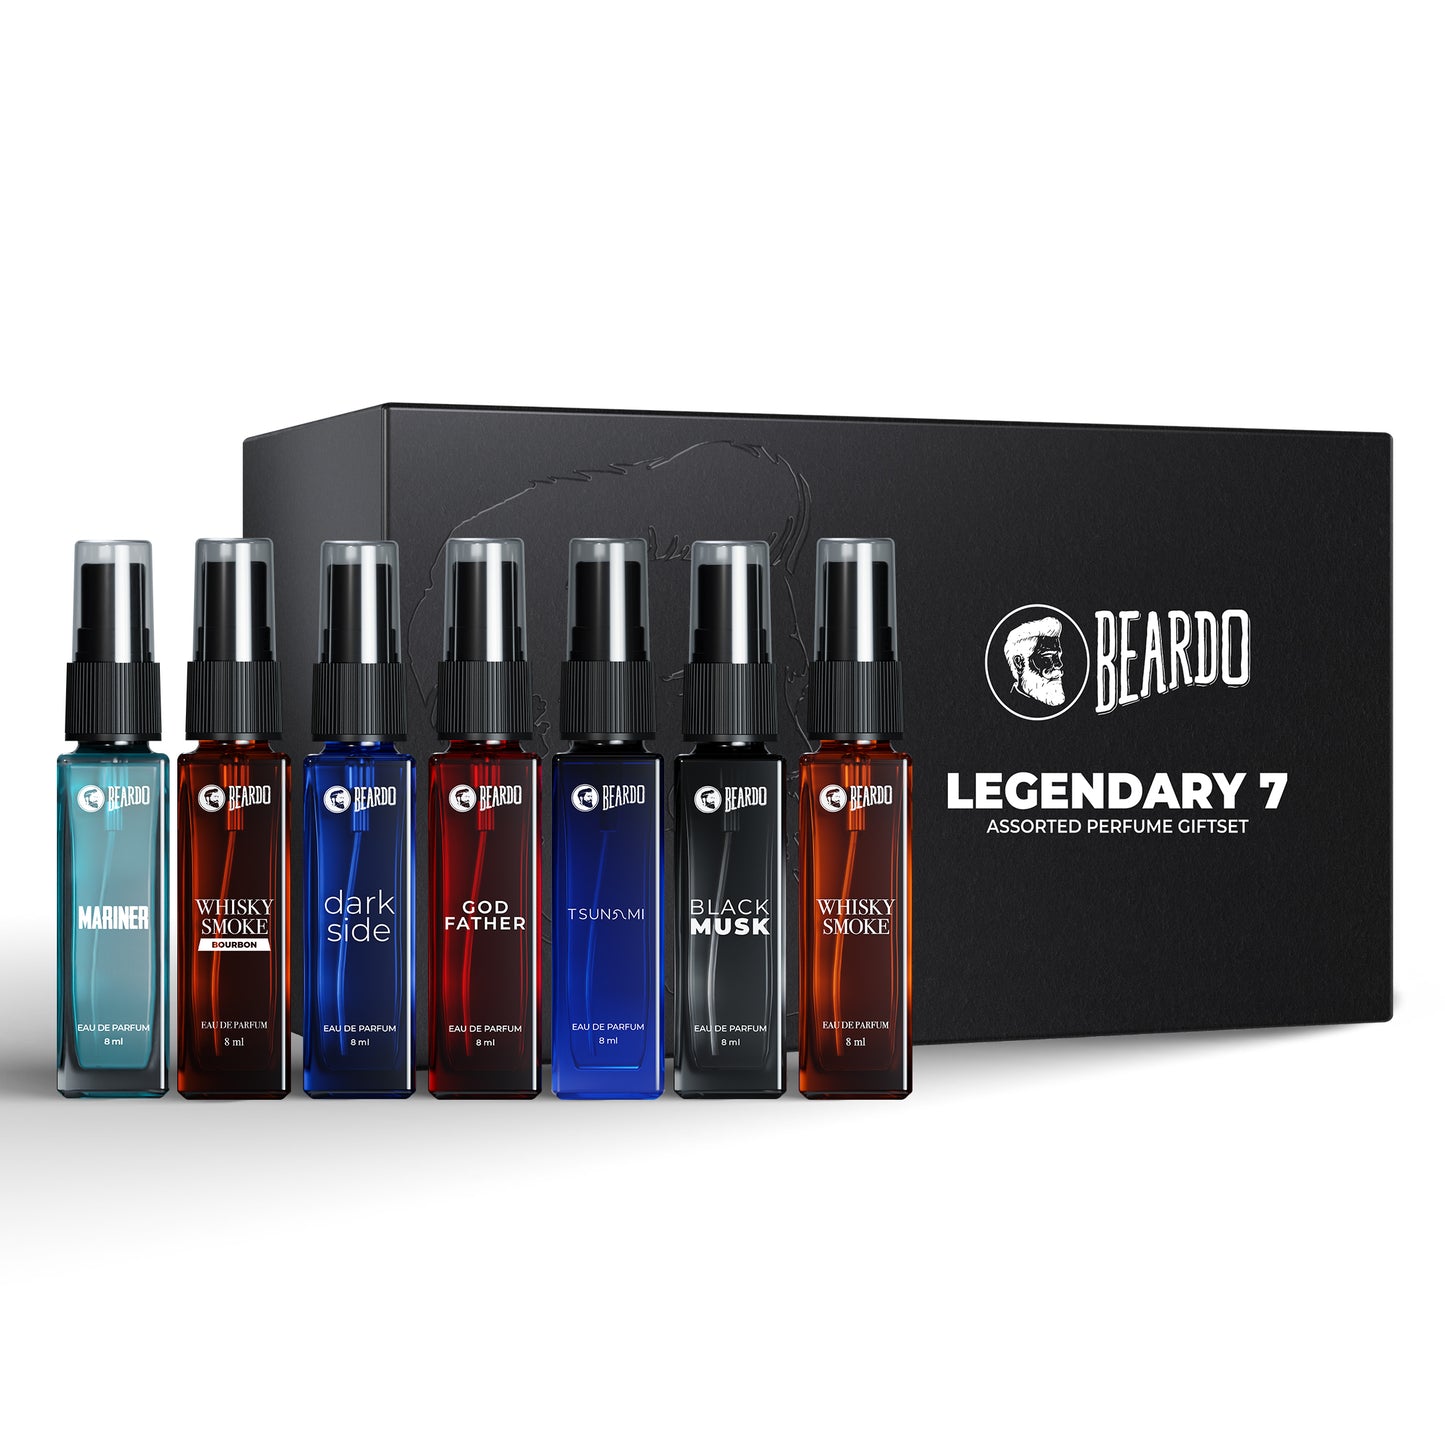 Beardo Legendary 7 Assorted Perfume Giftset